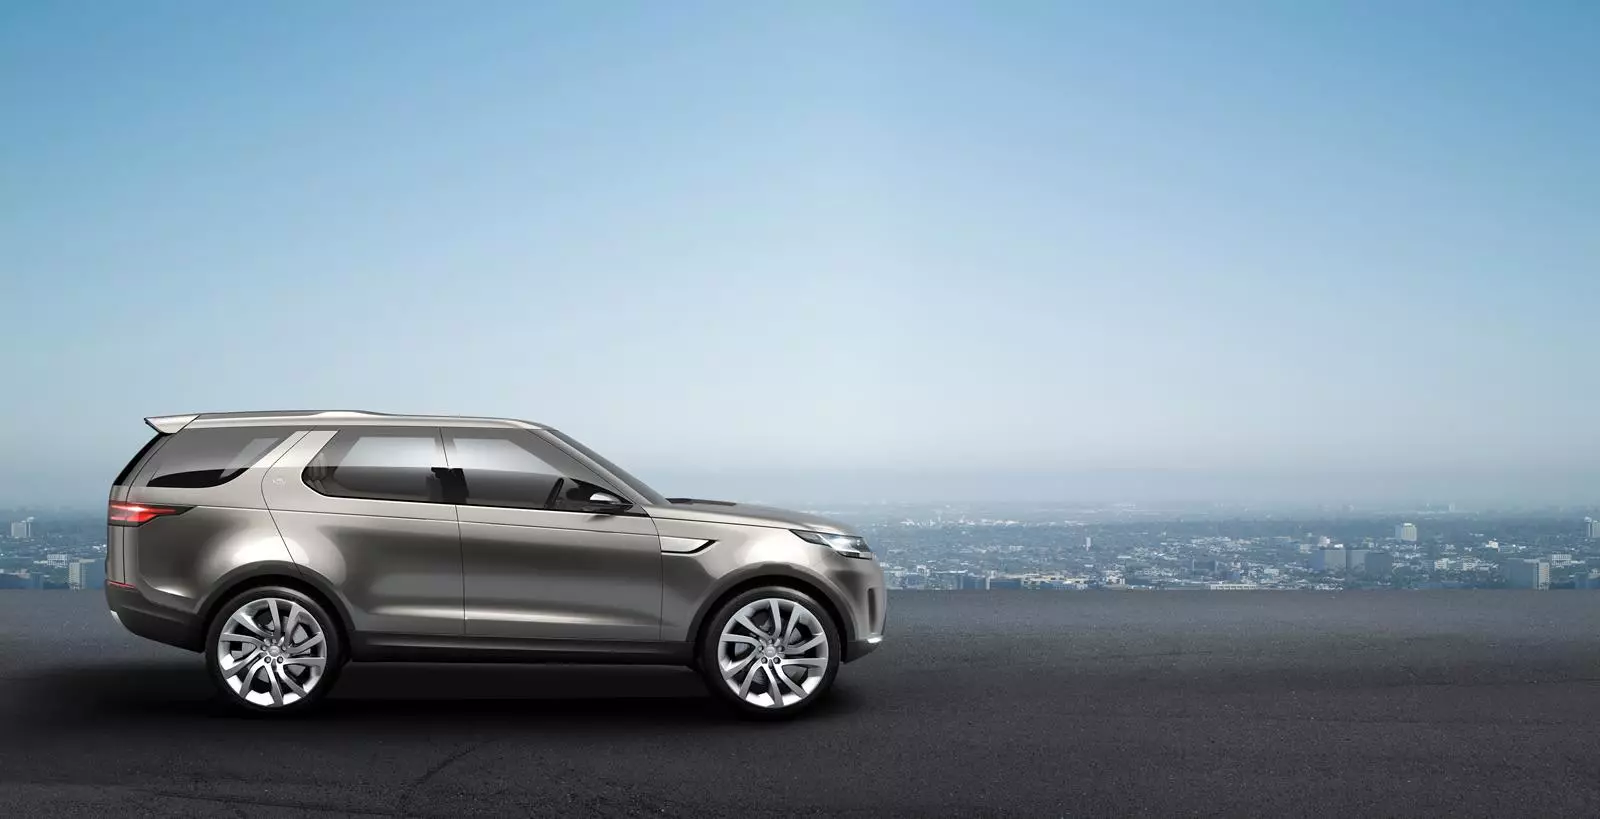 New Land Rover Discovery Vision Concept: ਬ੍ਰਿਟਿਸ਼ ਬ੍ਰਾਂਡ ਦਾ ਭਵਿੱਖ ਇਸ ਤਰ੍ਹਾਂ ਦਾ ਹੋਵੇਗਾ 25411_2